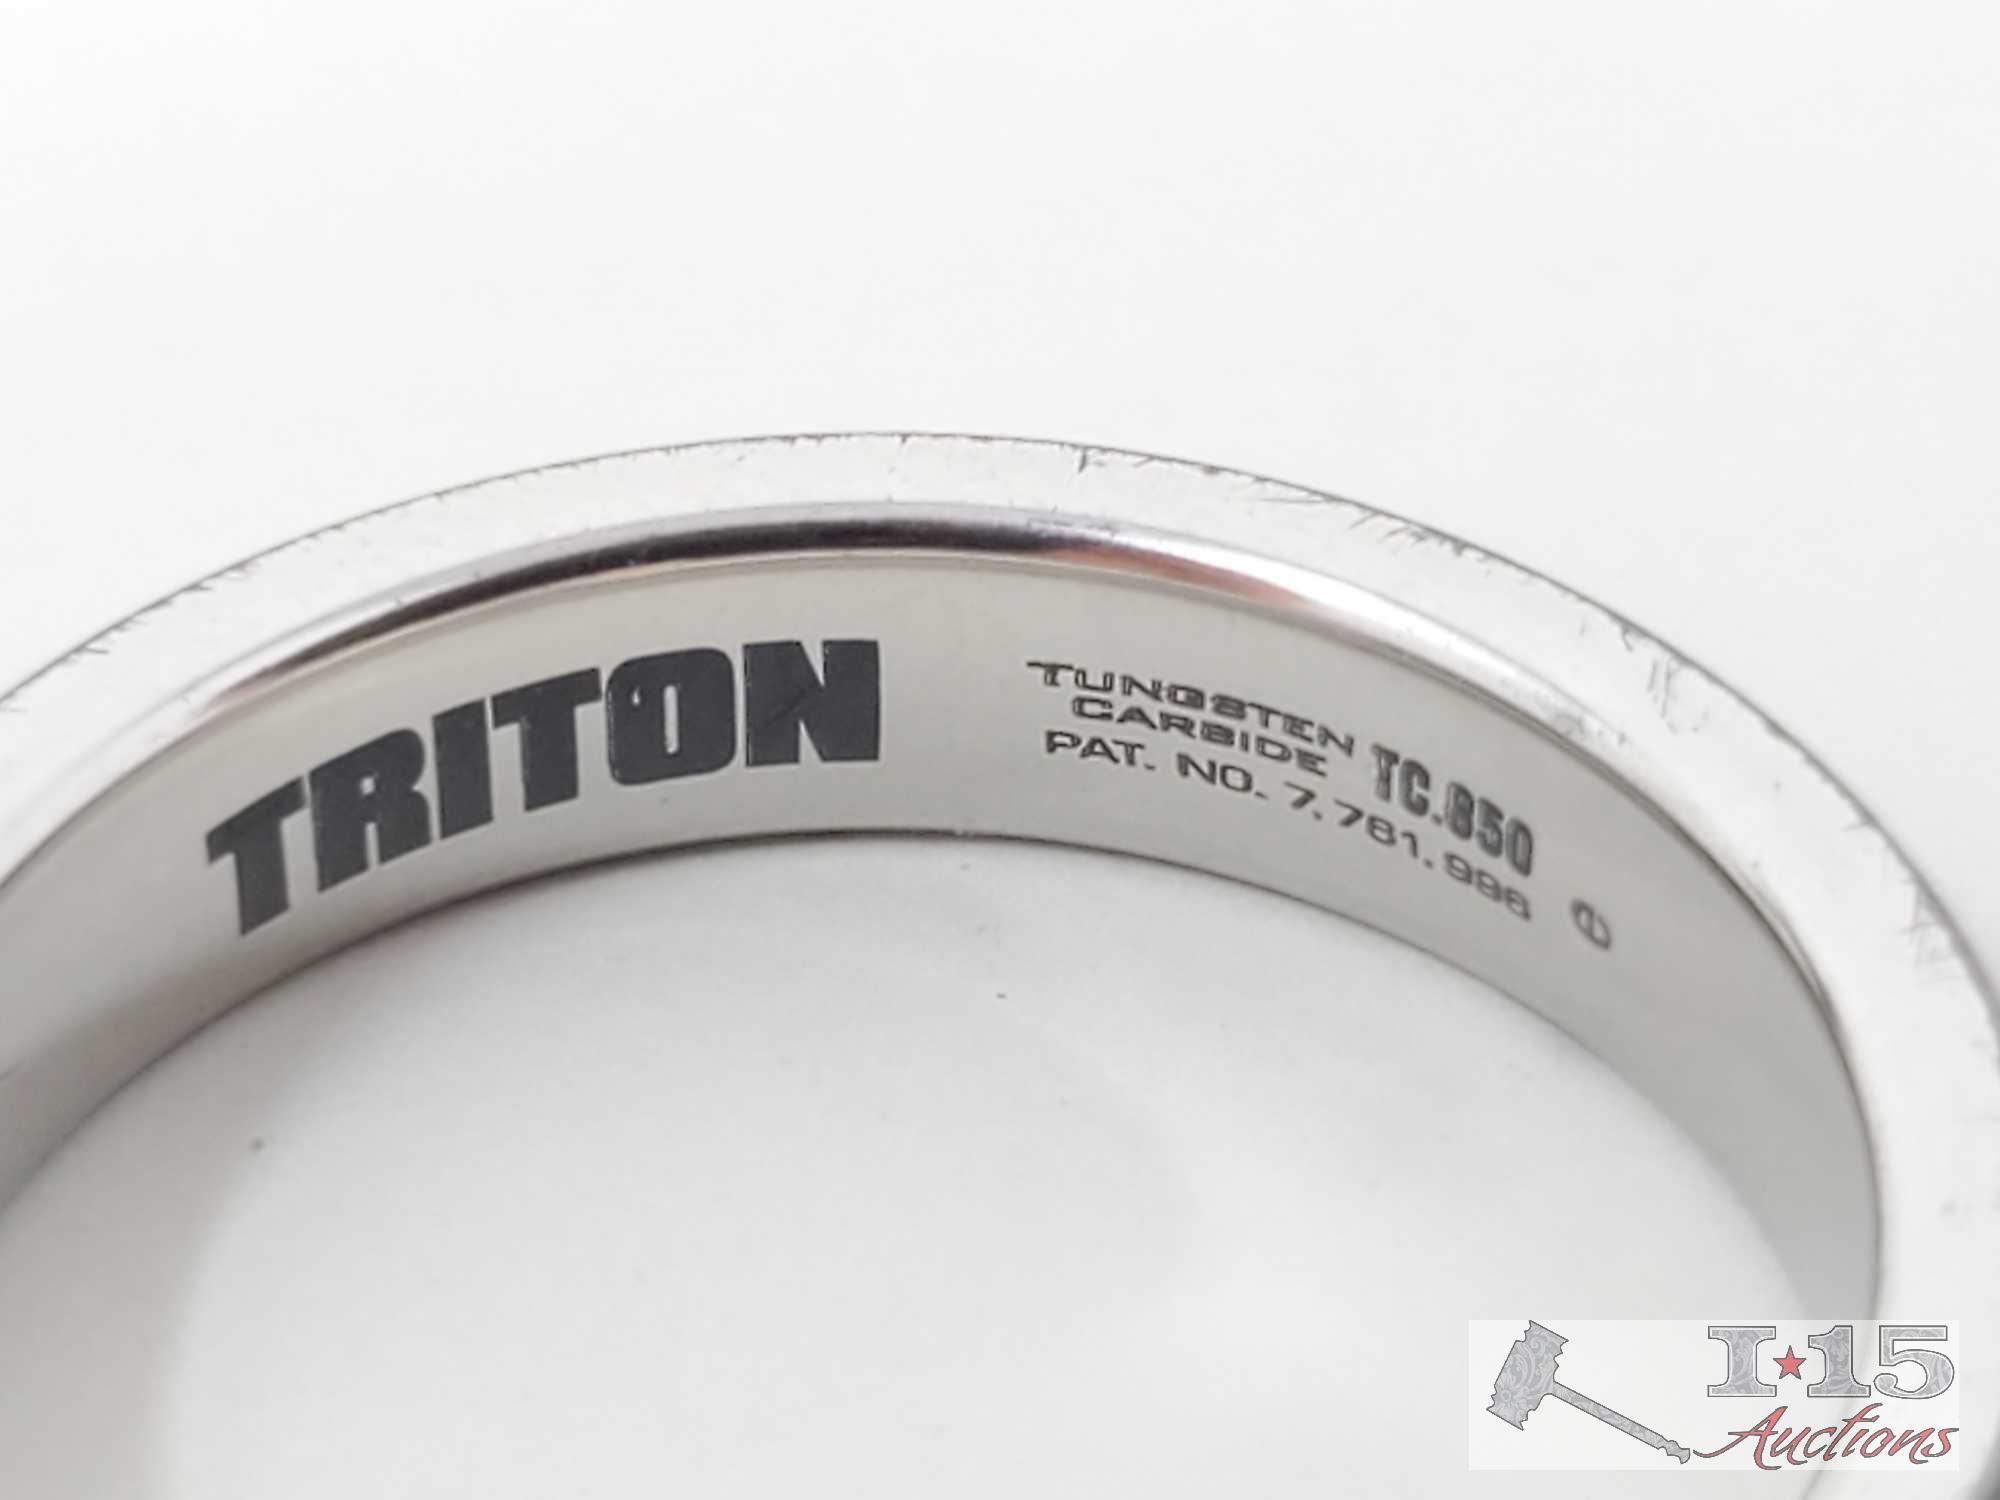 Triton Tungsten Carbide Ring And Casio Watch